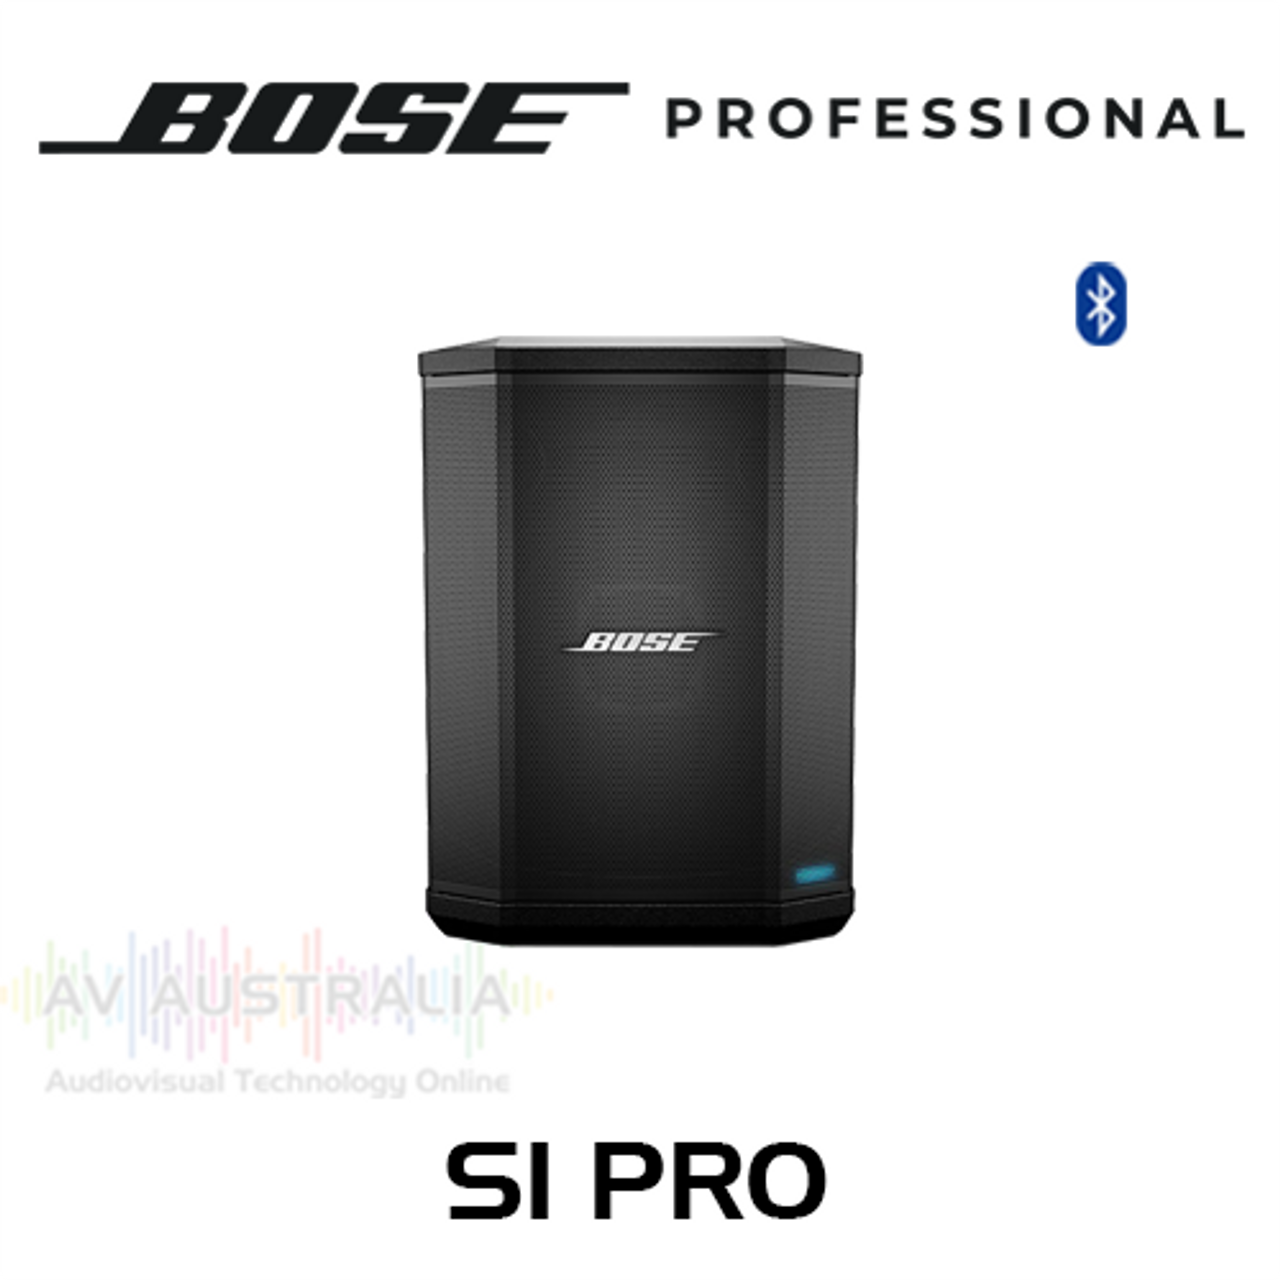 Bose Pro S1 PRO Multi-Position Portable PA System